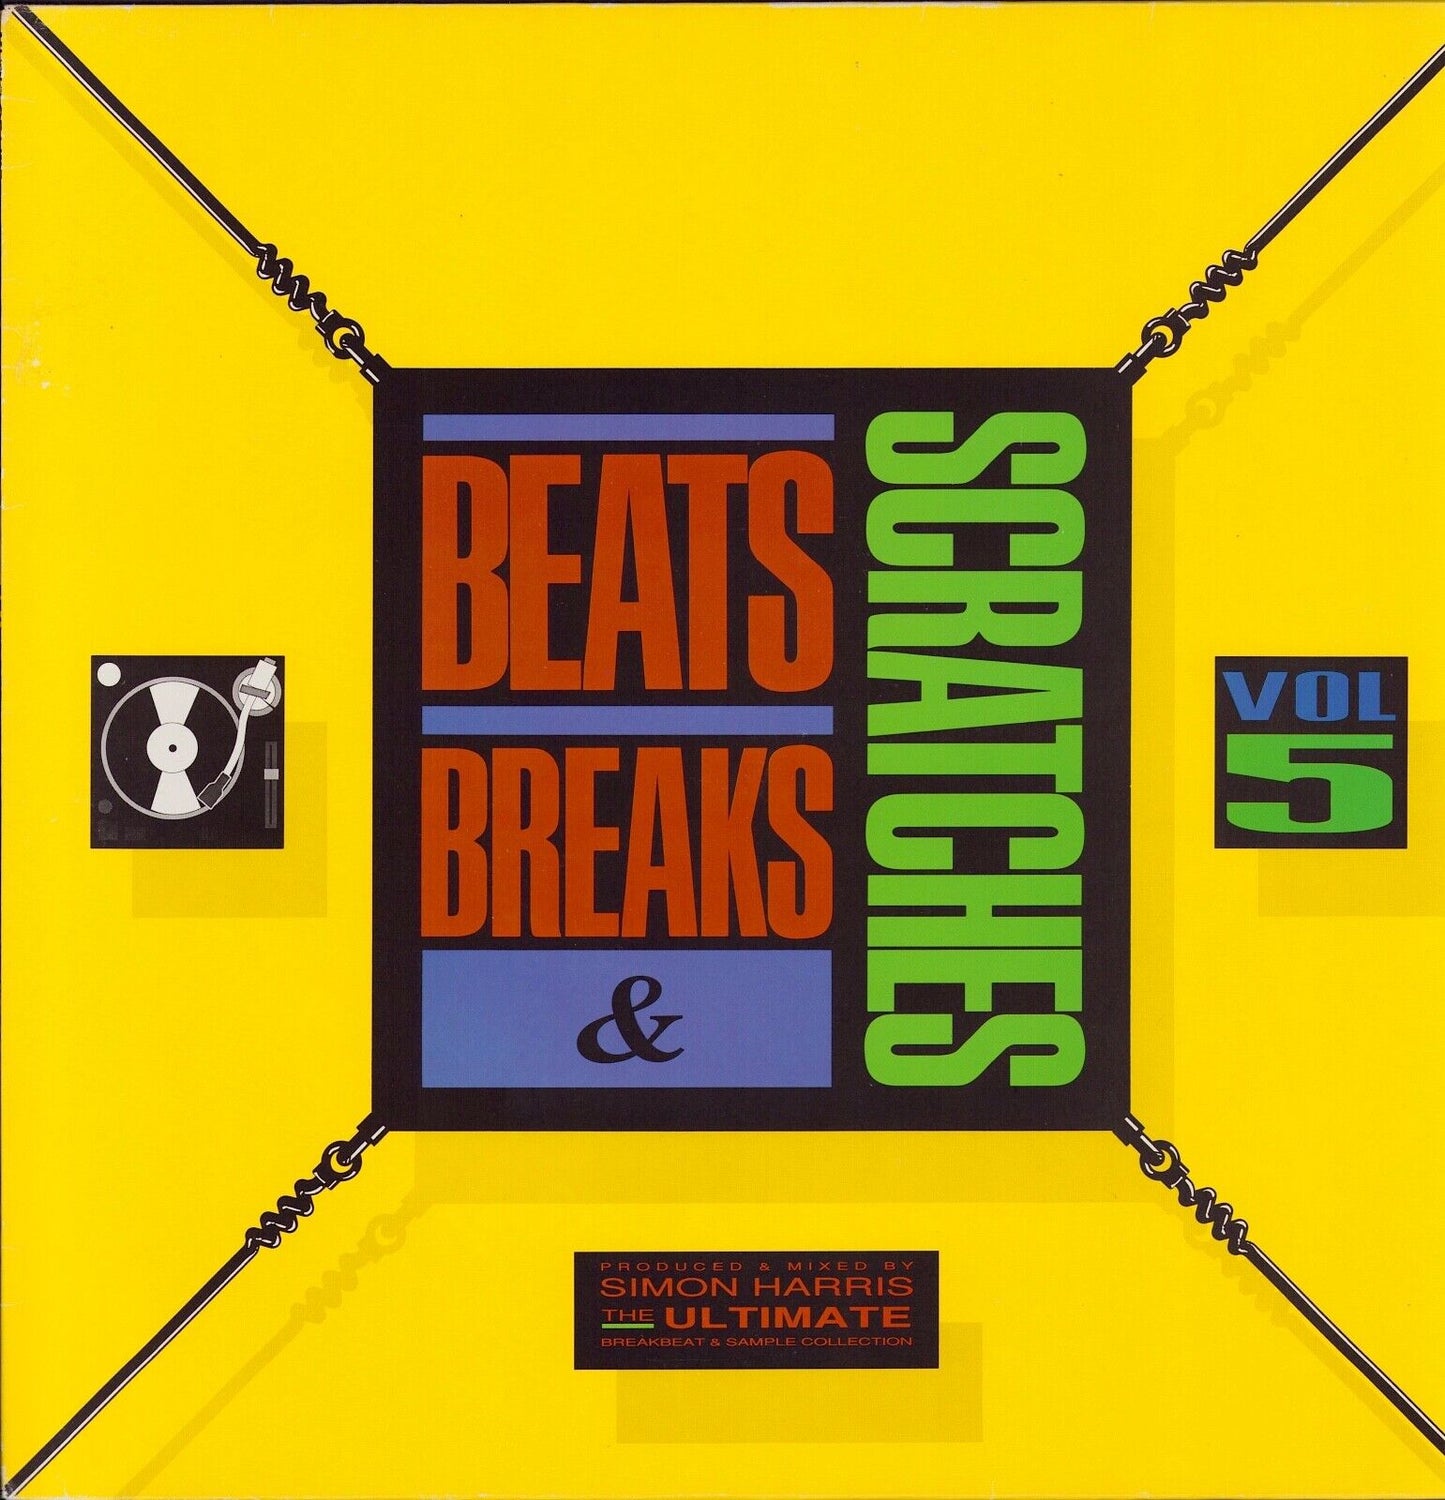 Simon Harris ‎- Beats, Breaks & Scratches Volume 5 Vinyl LP